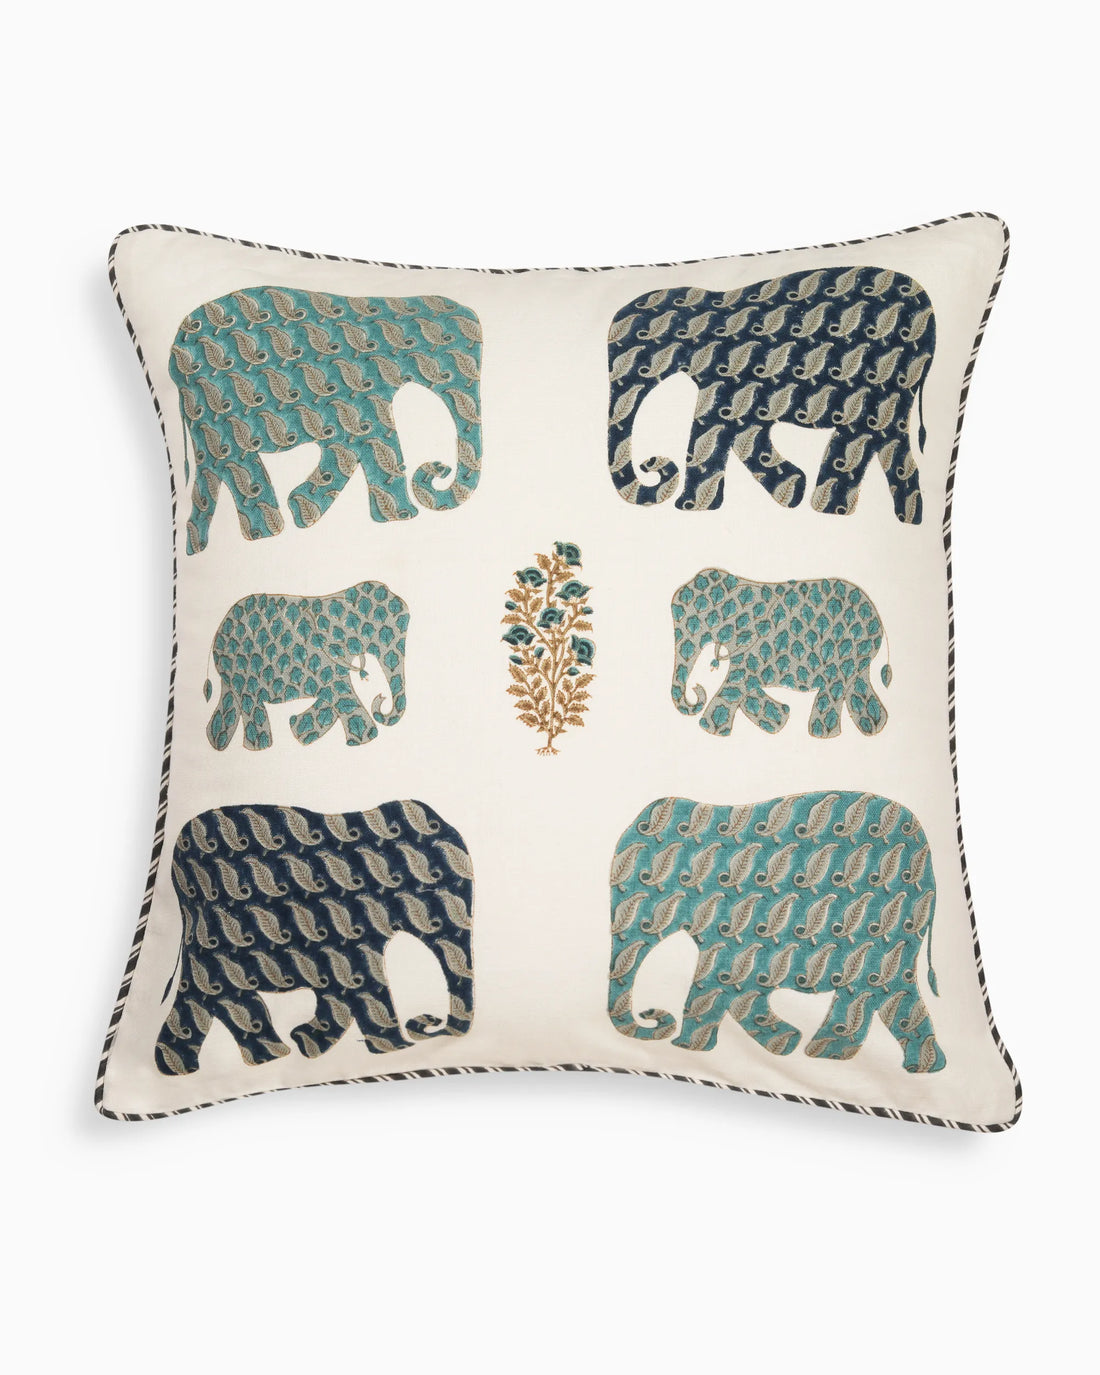 Regal Elephants Pillow Cover